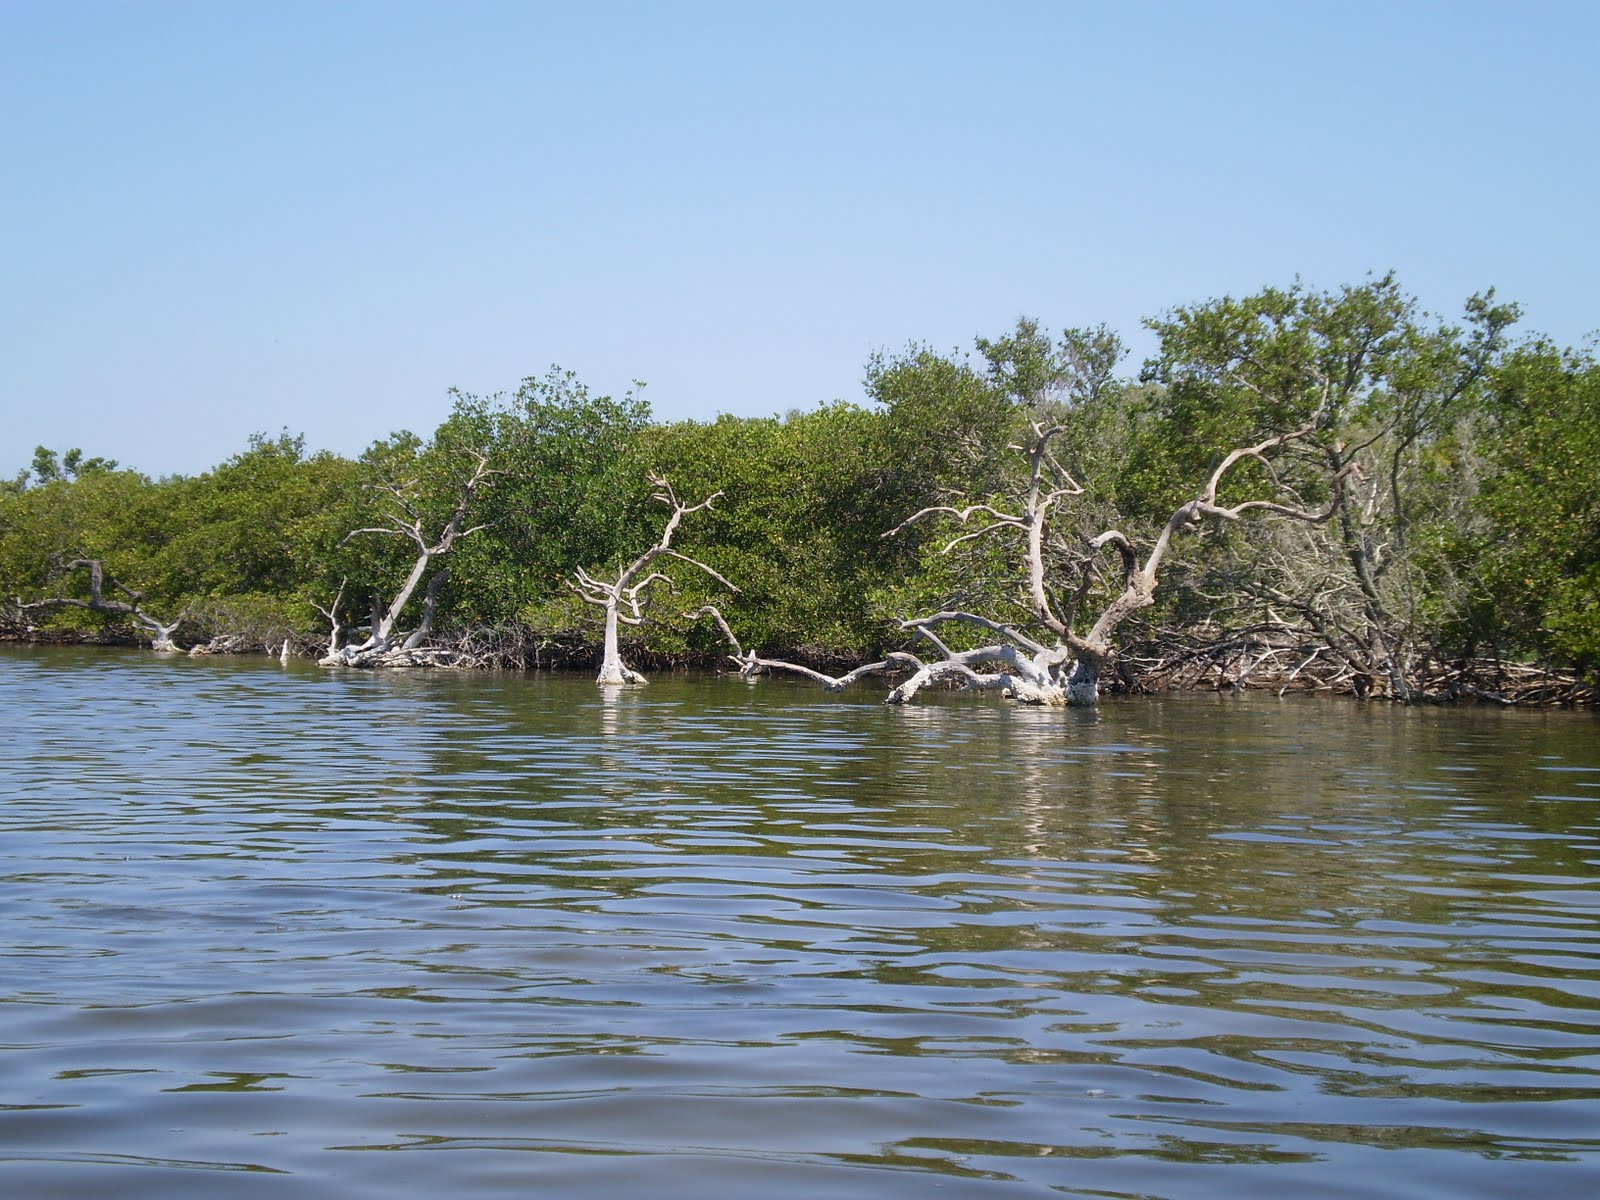 Andrea's Photo Blog: Mangrove, Swamp & Trees in Cocoa Beach Florida1600 x 1200